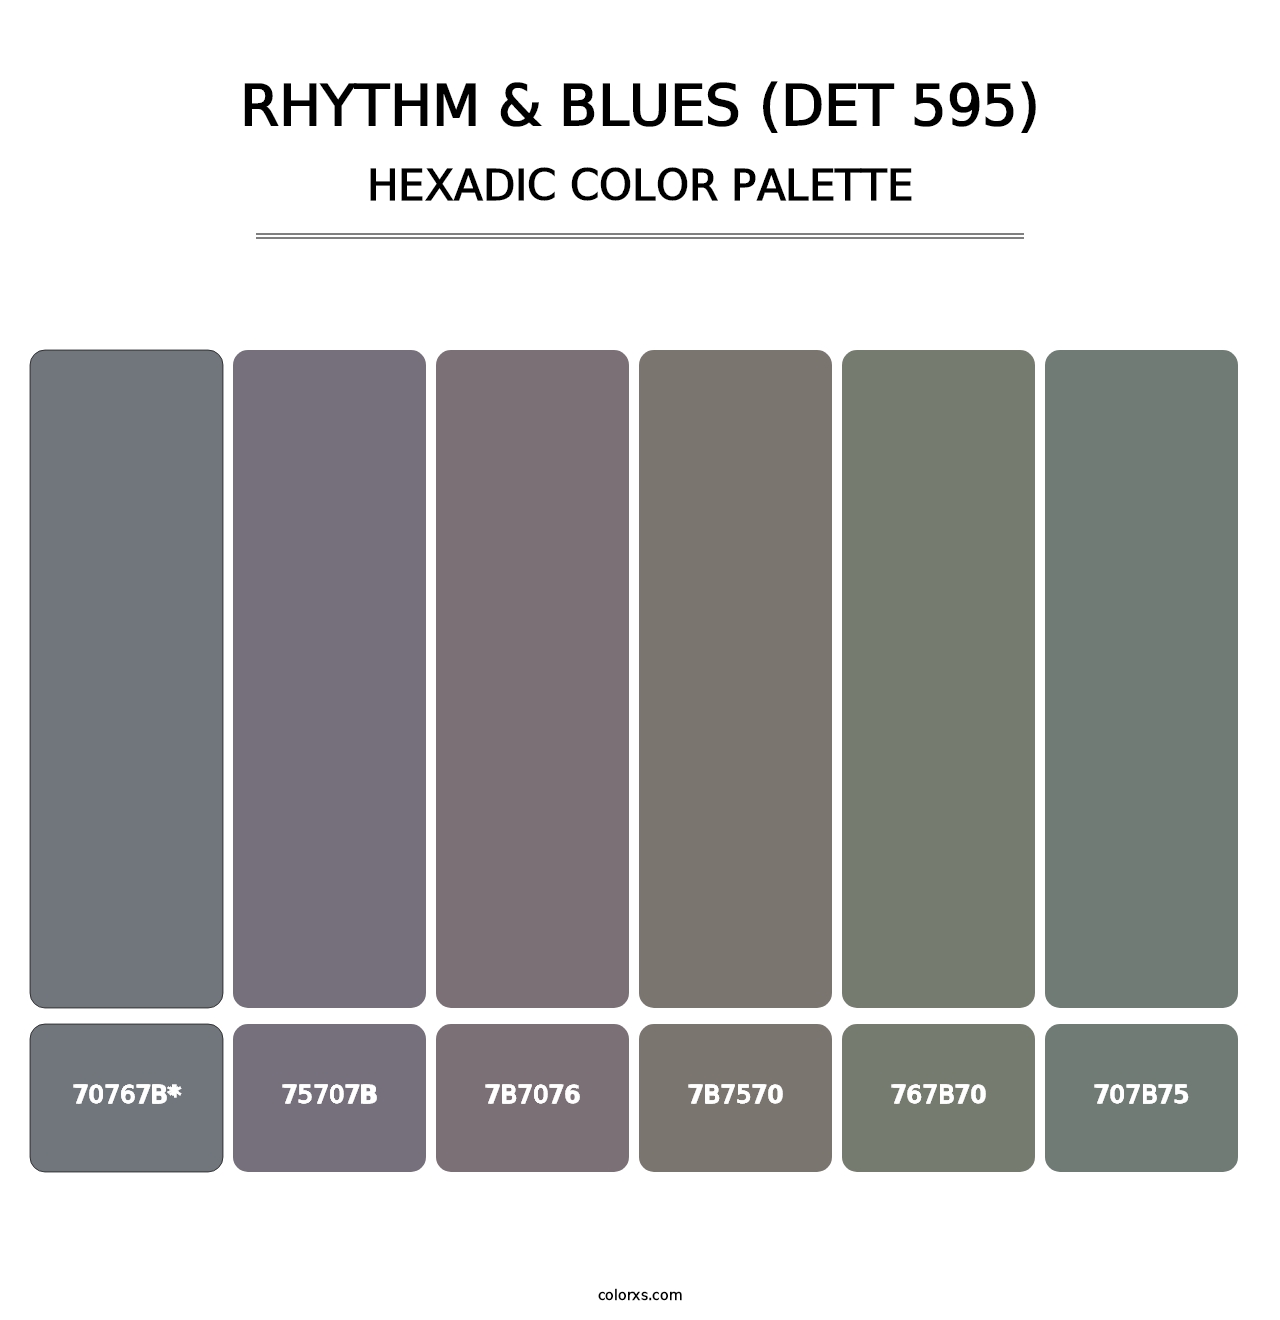 Rhythm & Blues (DET 595) - Hexadic Color Palette